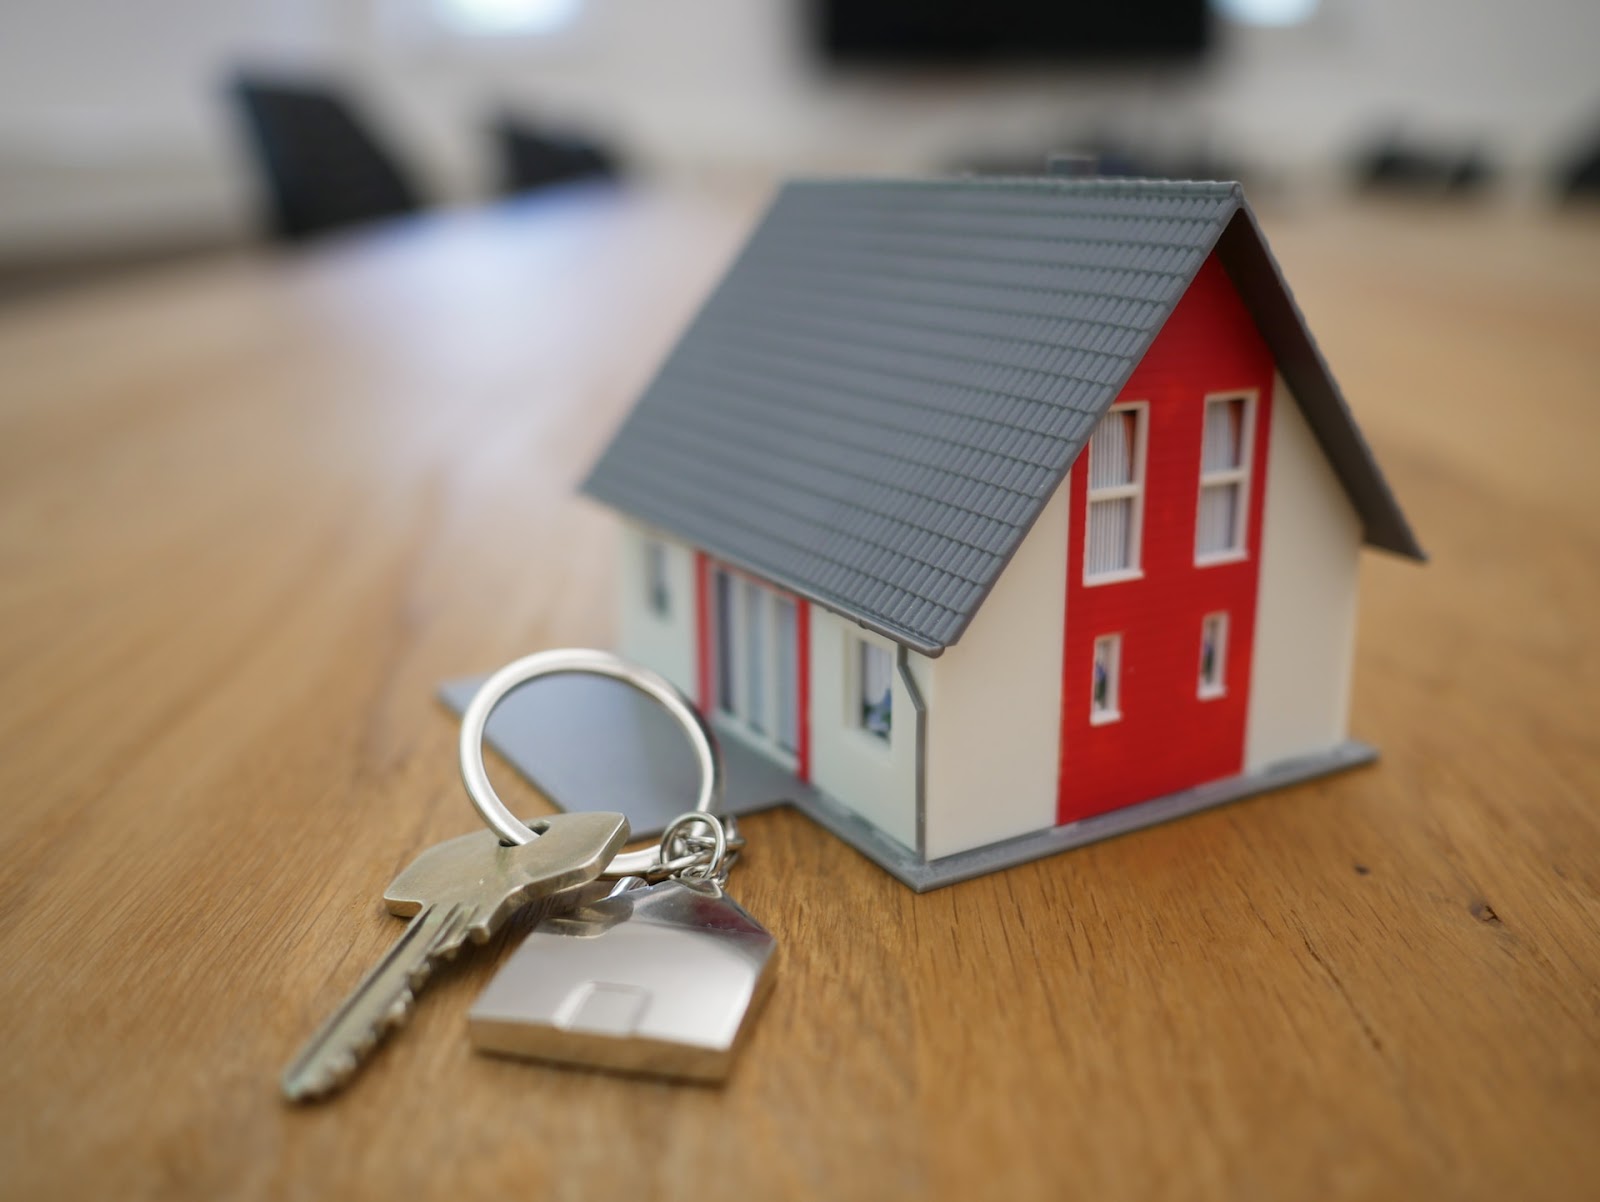 a key and a house model